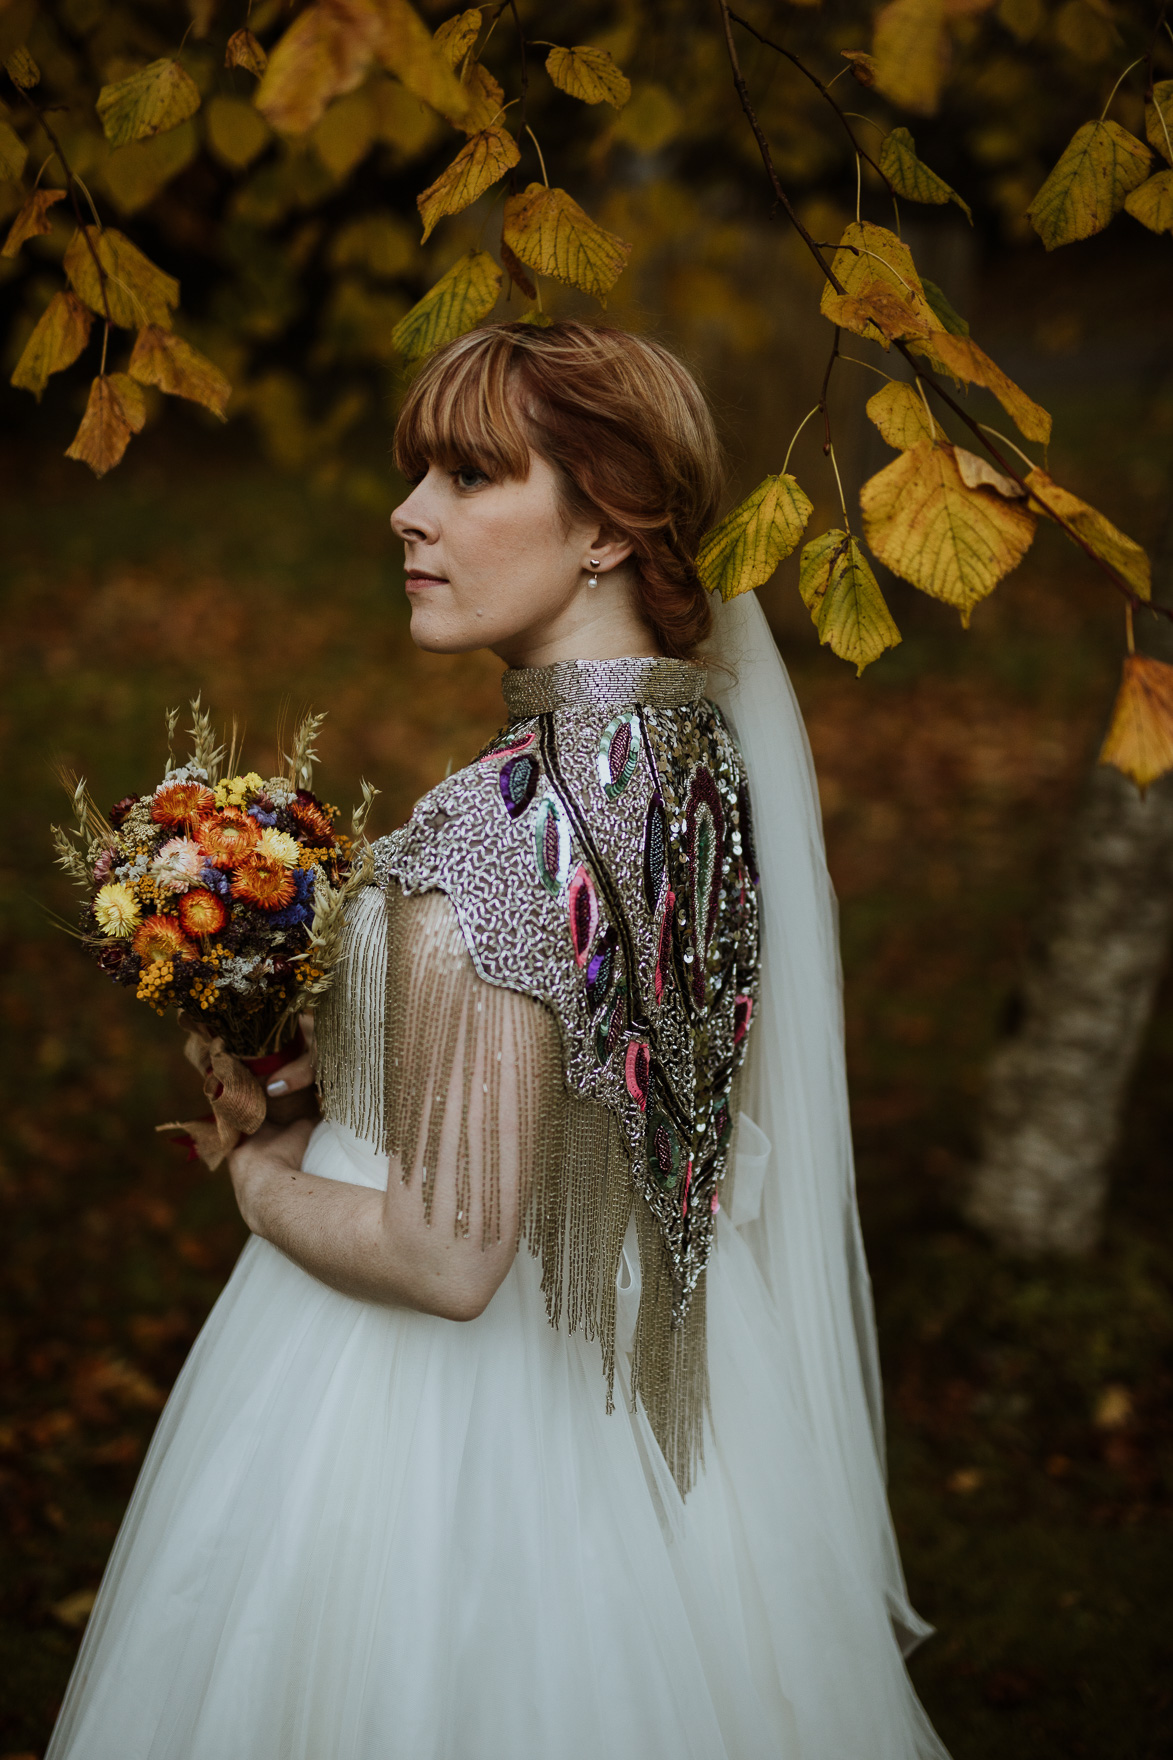 A woman wearing a wedding dress